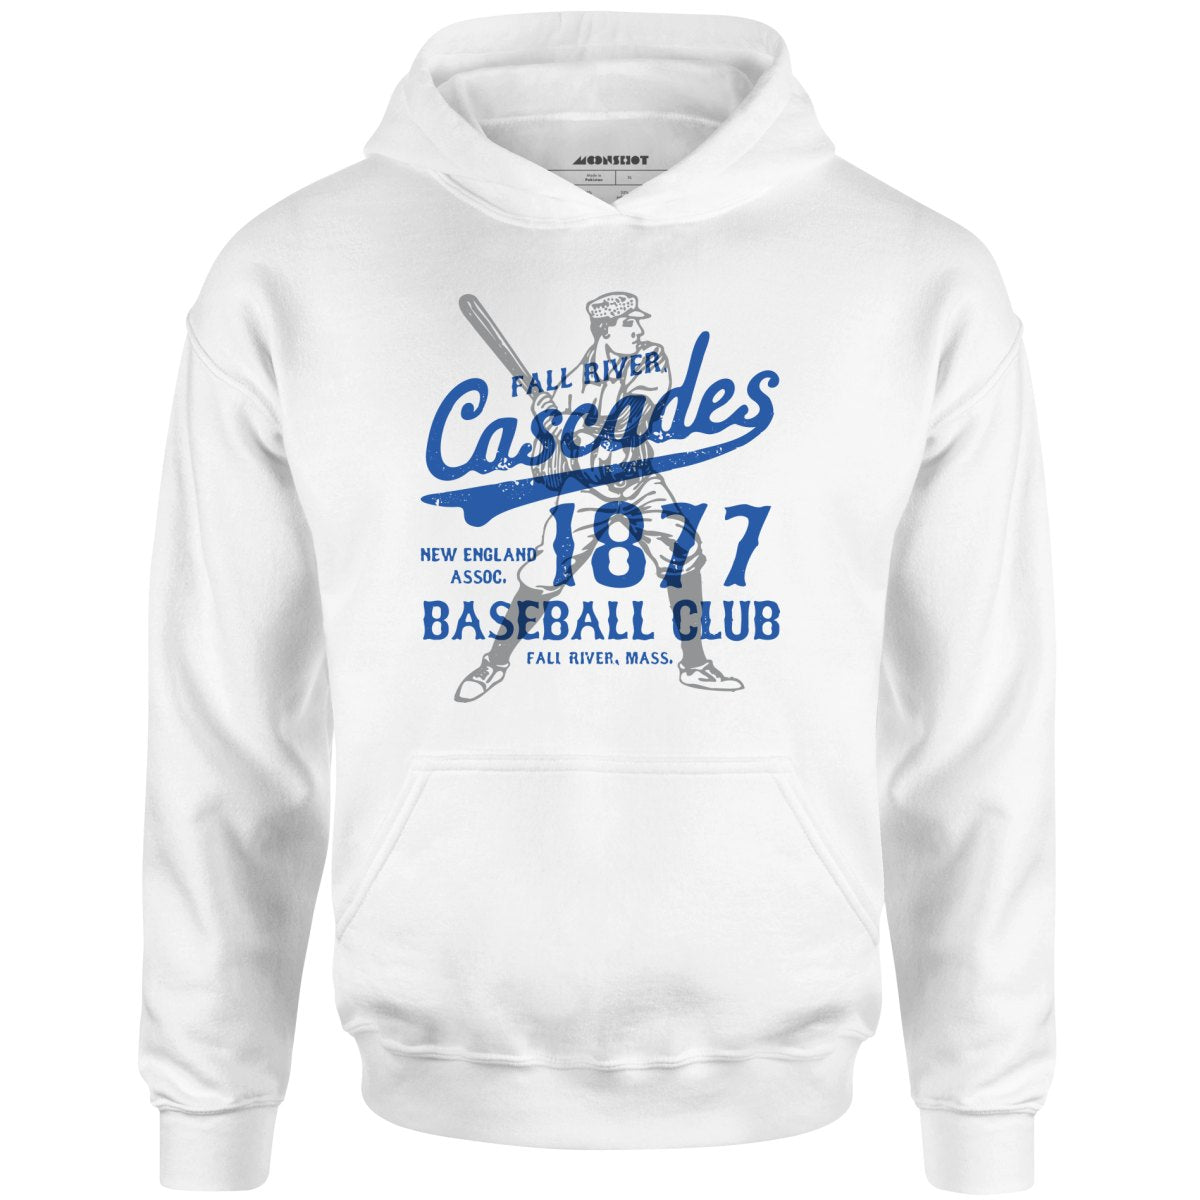 Fall River Cascades - Massachusetts - Vintage Defunct Baseball Teams - Unisex Hoodie